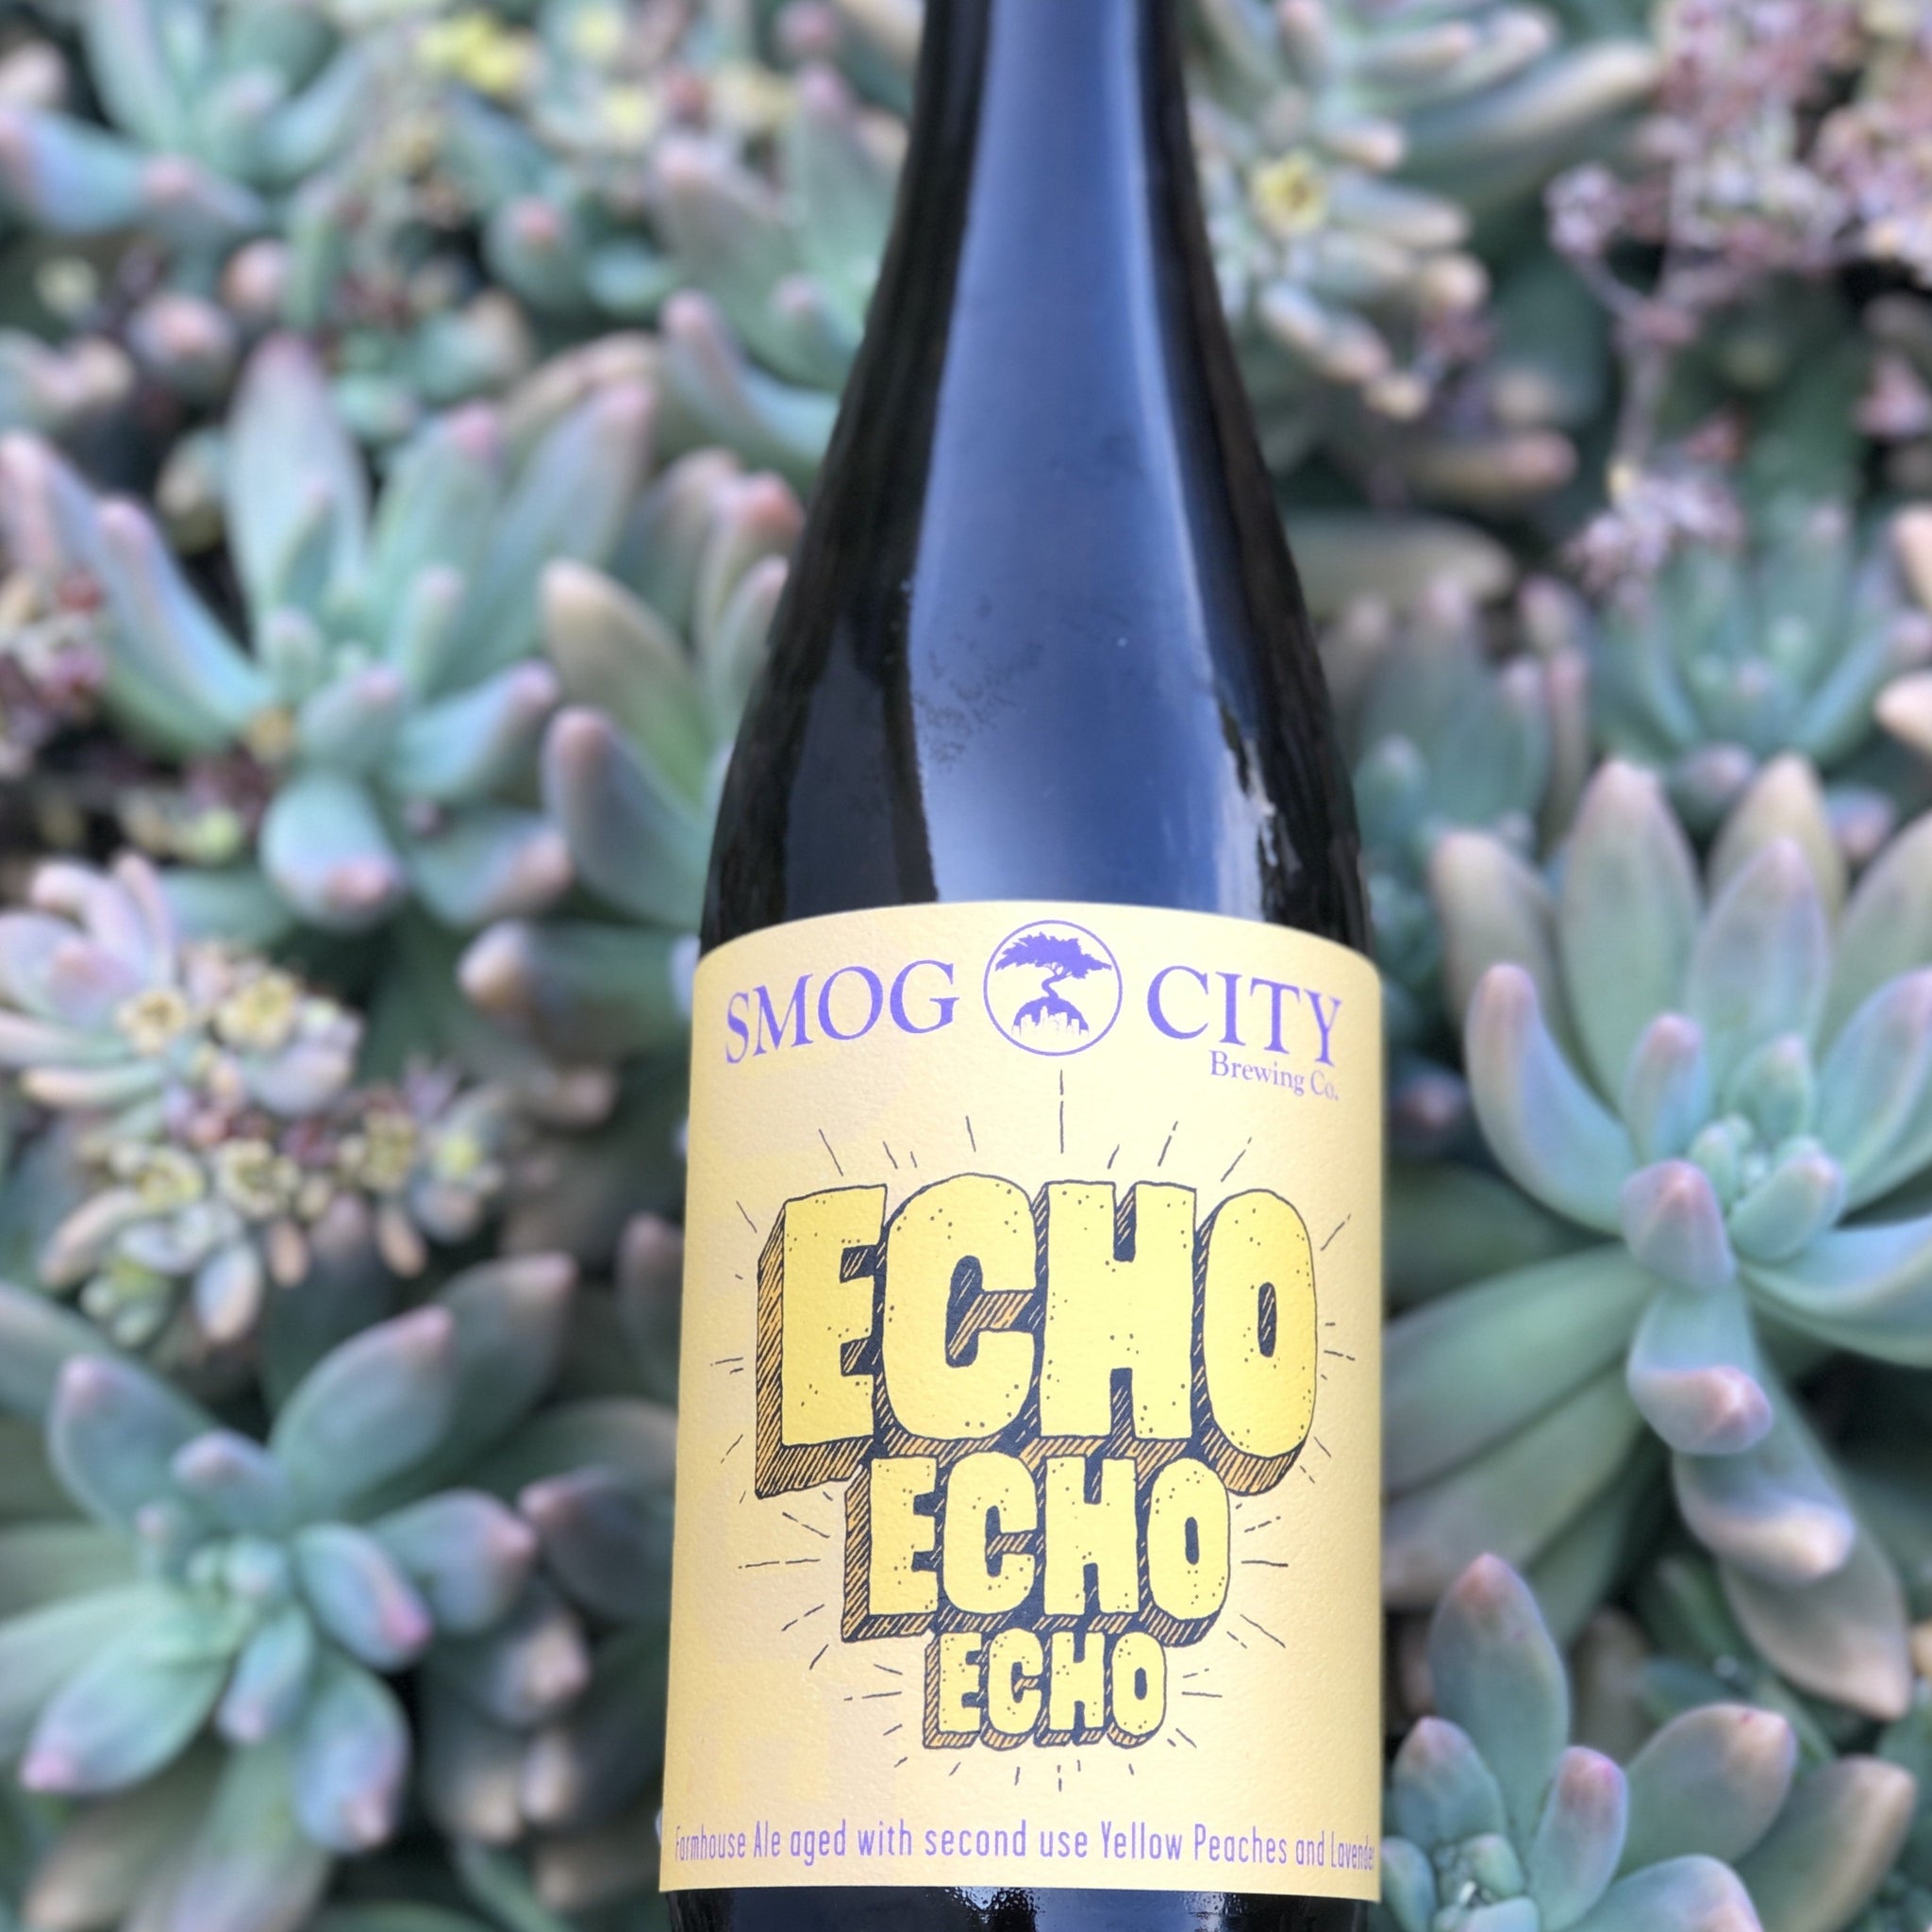 Echo Echo Echo